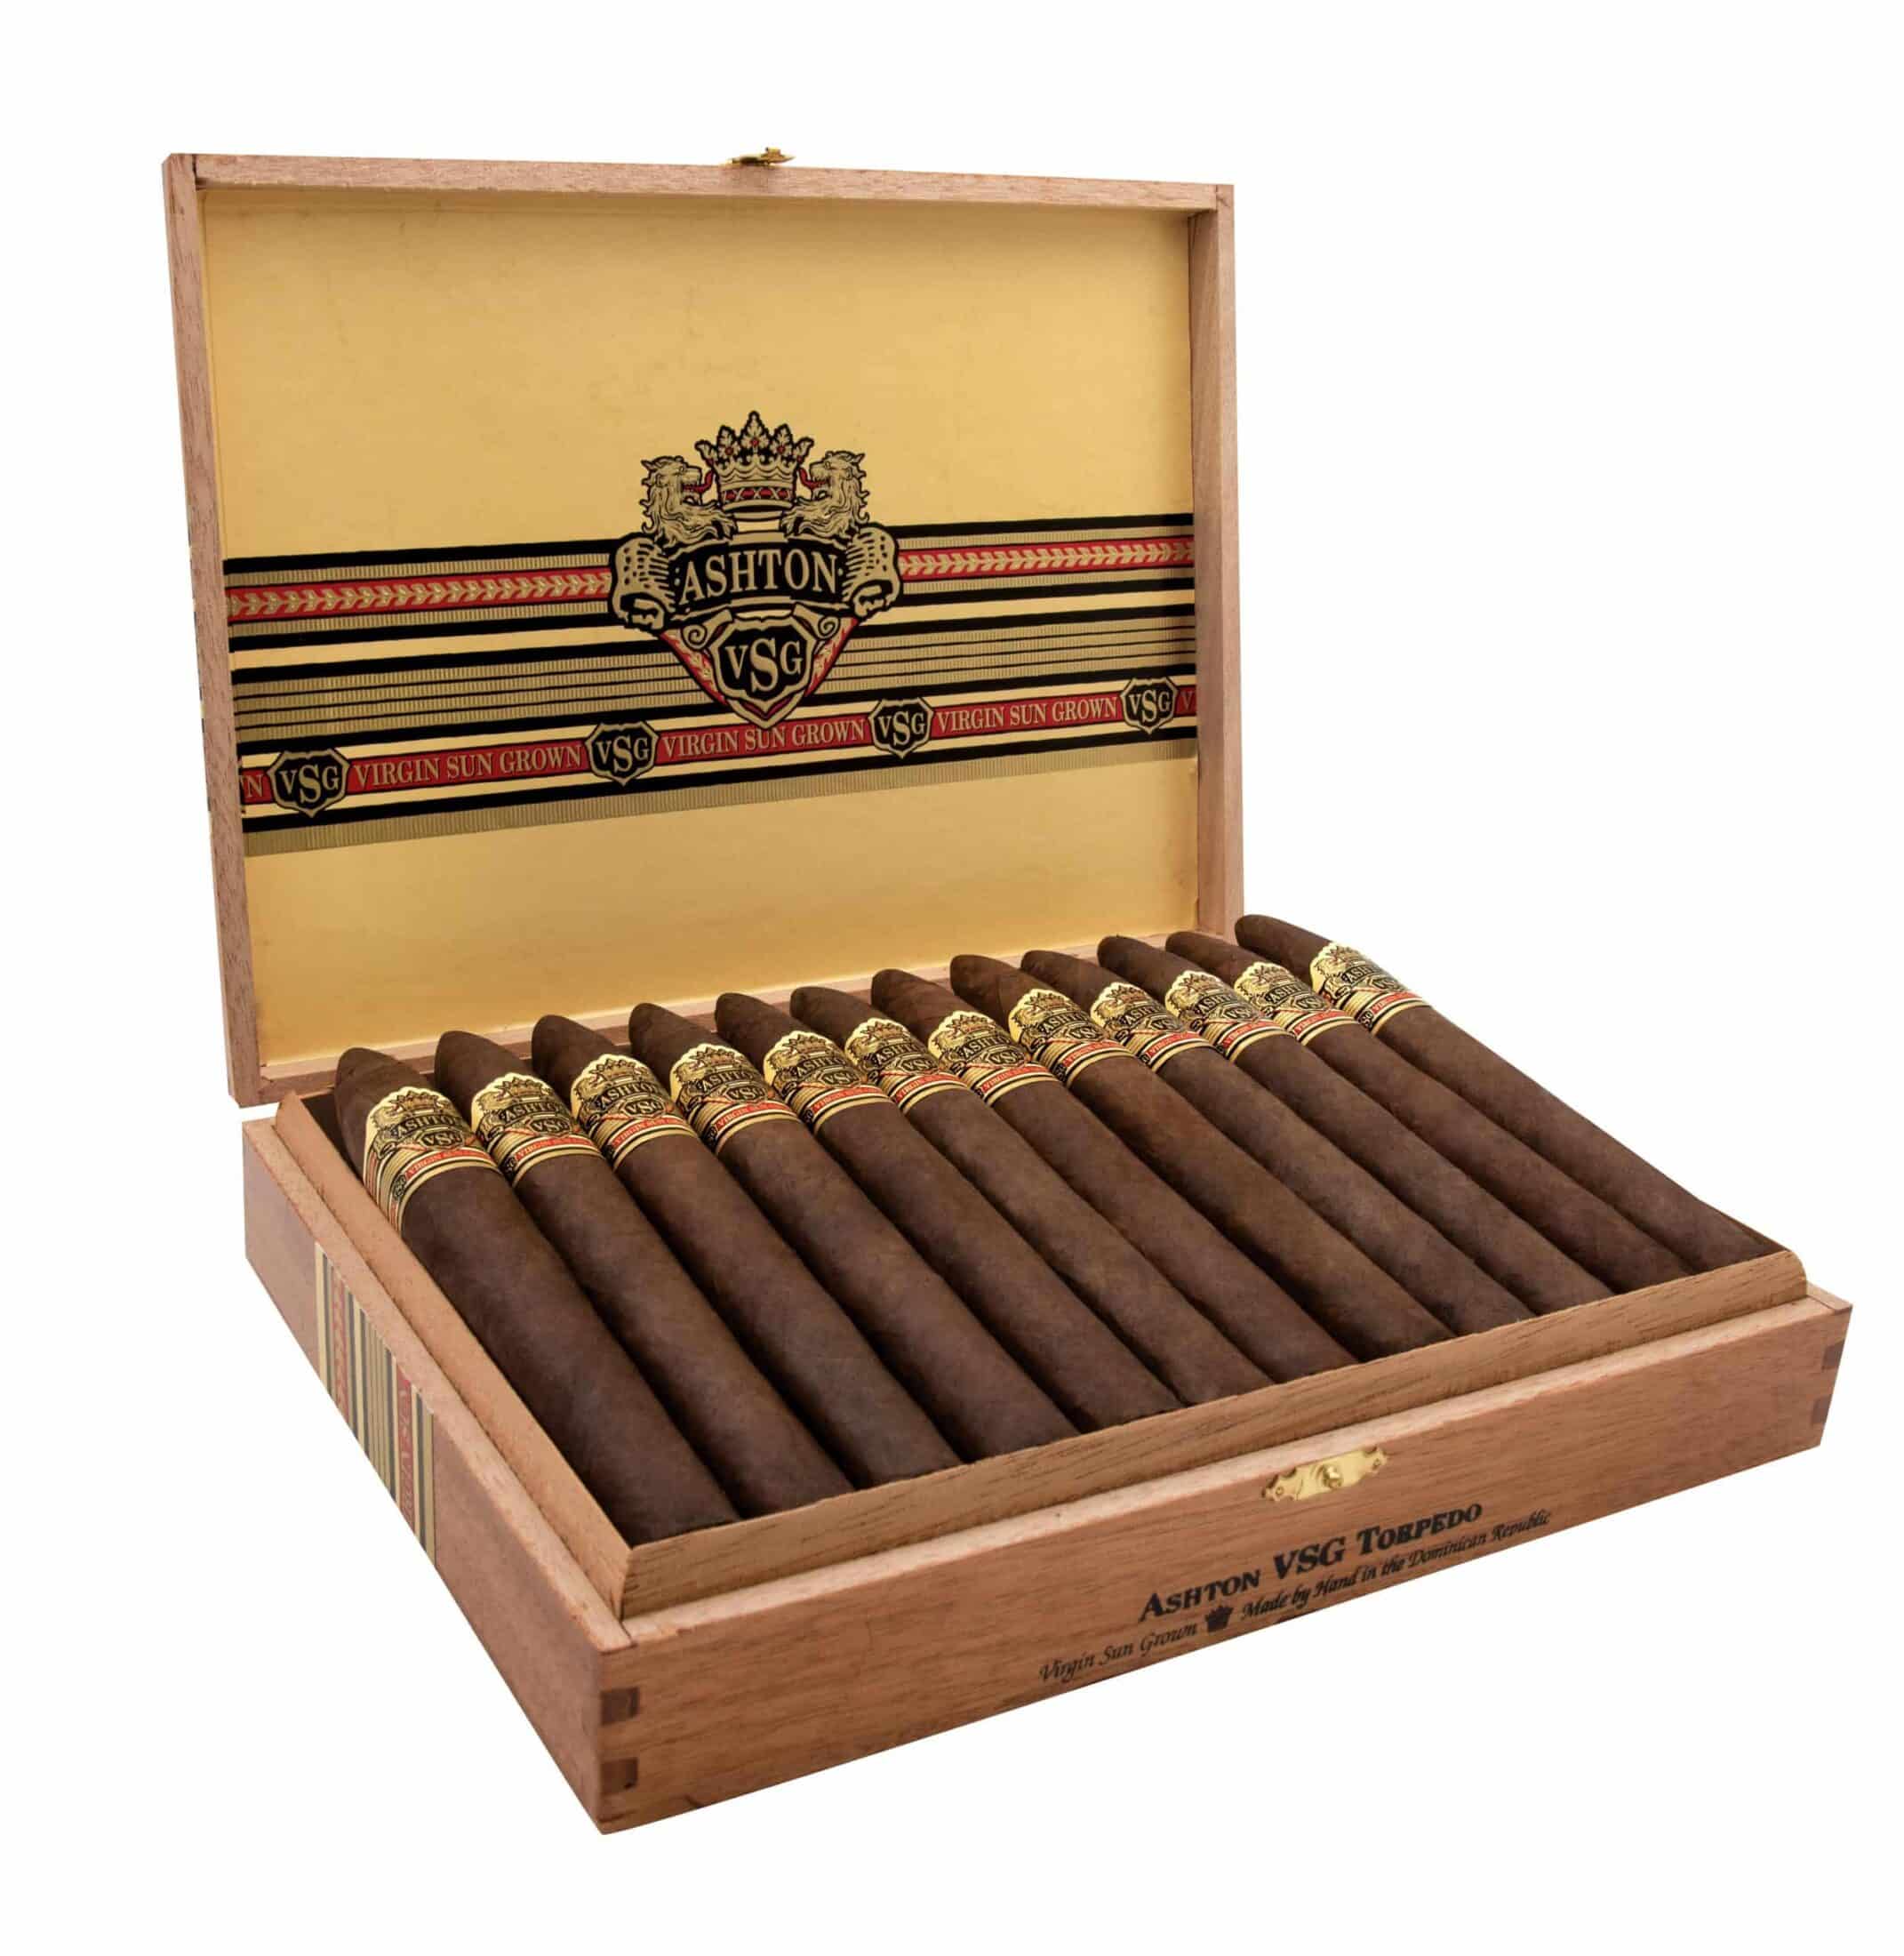 Open box of 12 count Ashton VSG Torpedo cigars